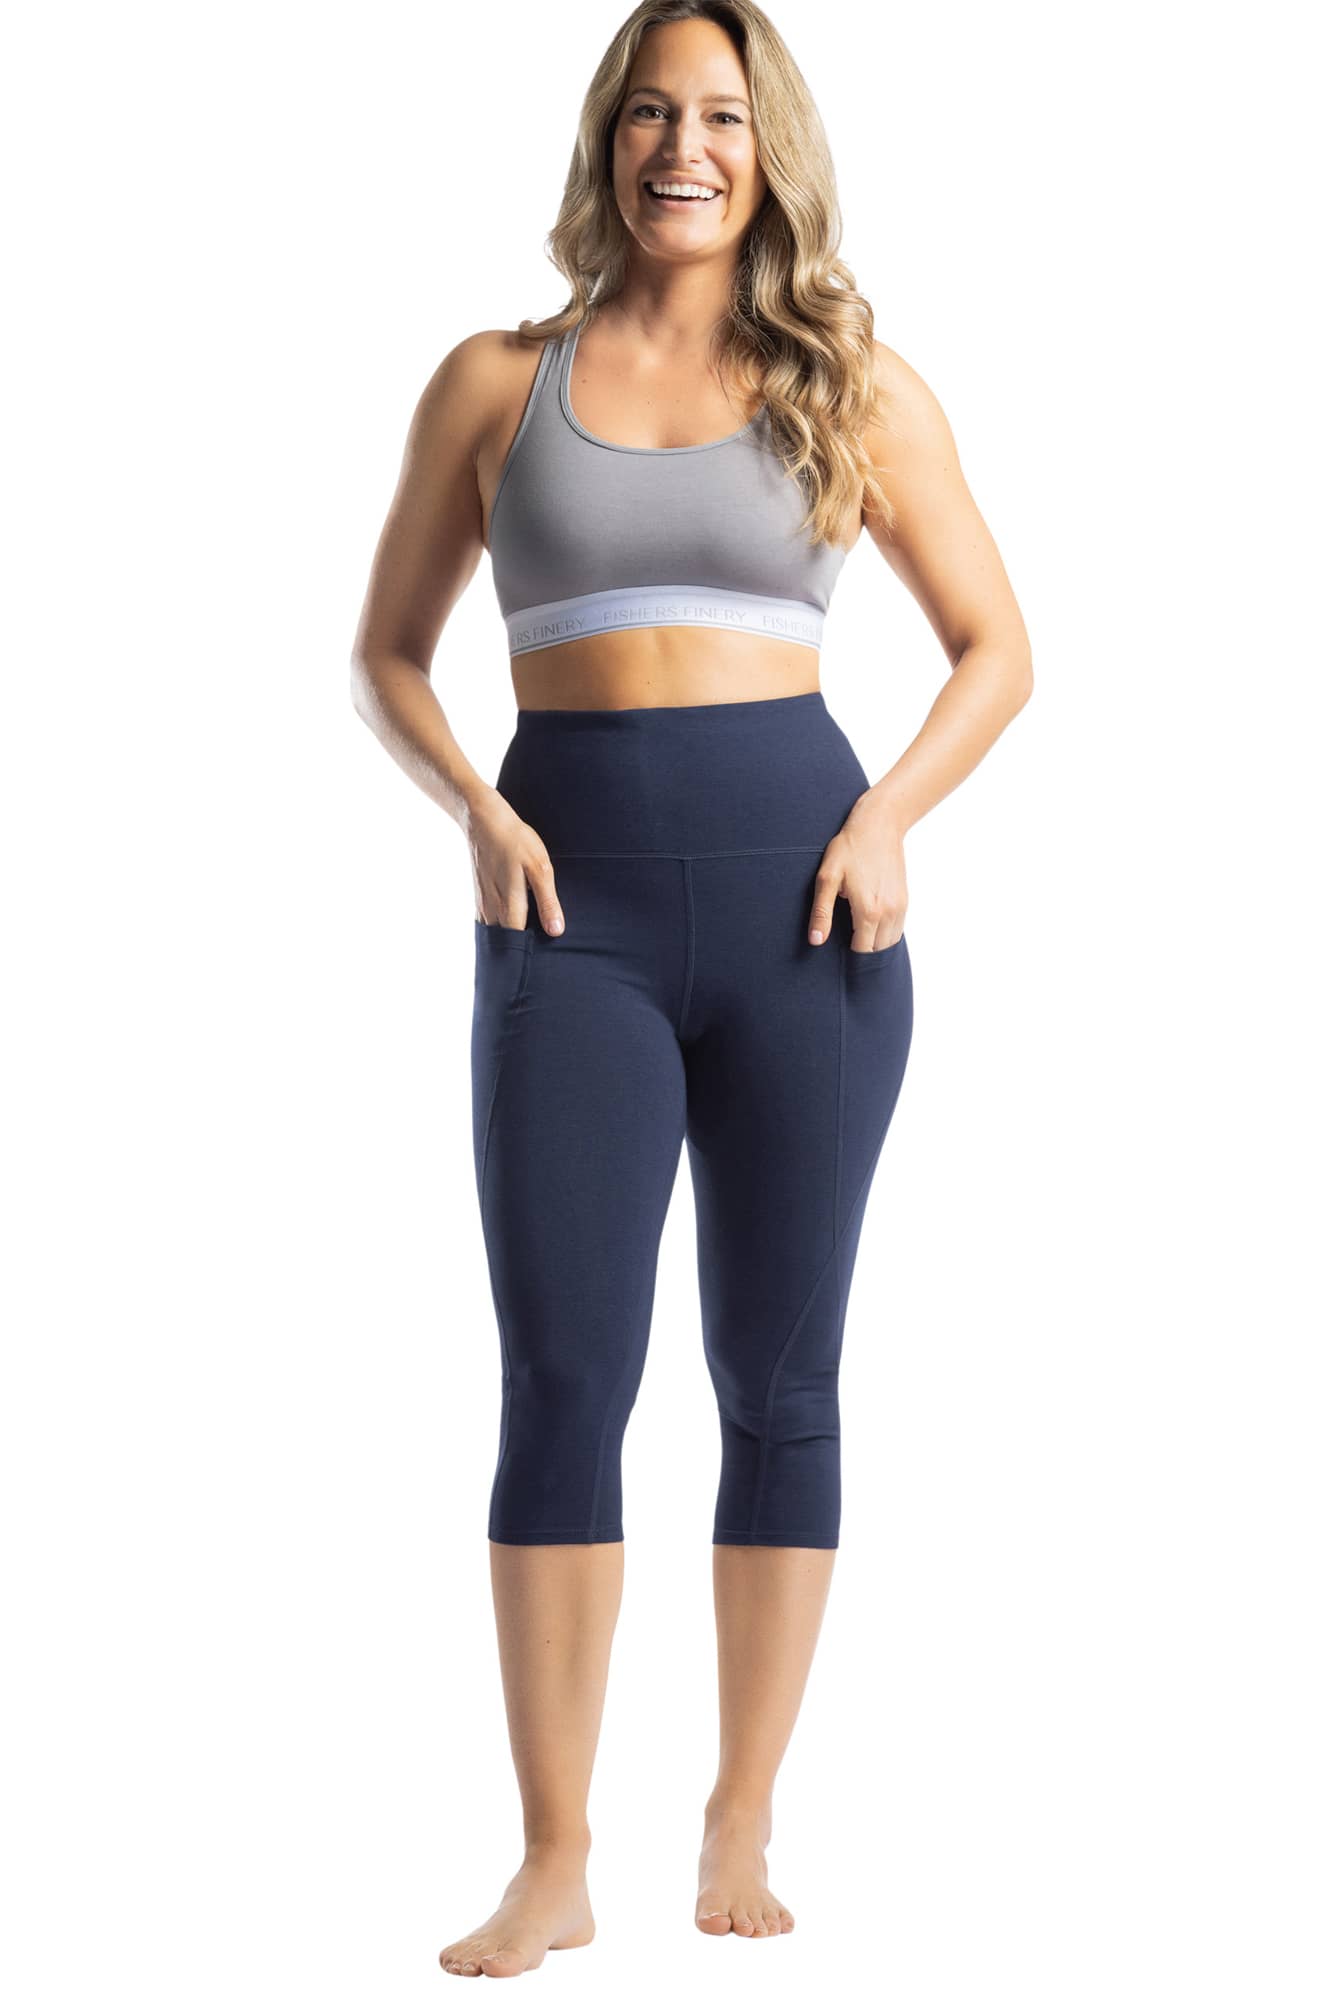 Buy Geifa Women's Gym Capri Tights, Active Wear,Yoga & Workout, The Gym Pants  for Women & Girls, Ladies Gym Capri